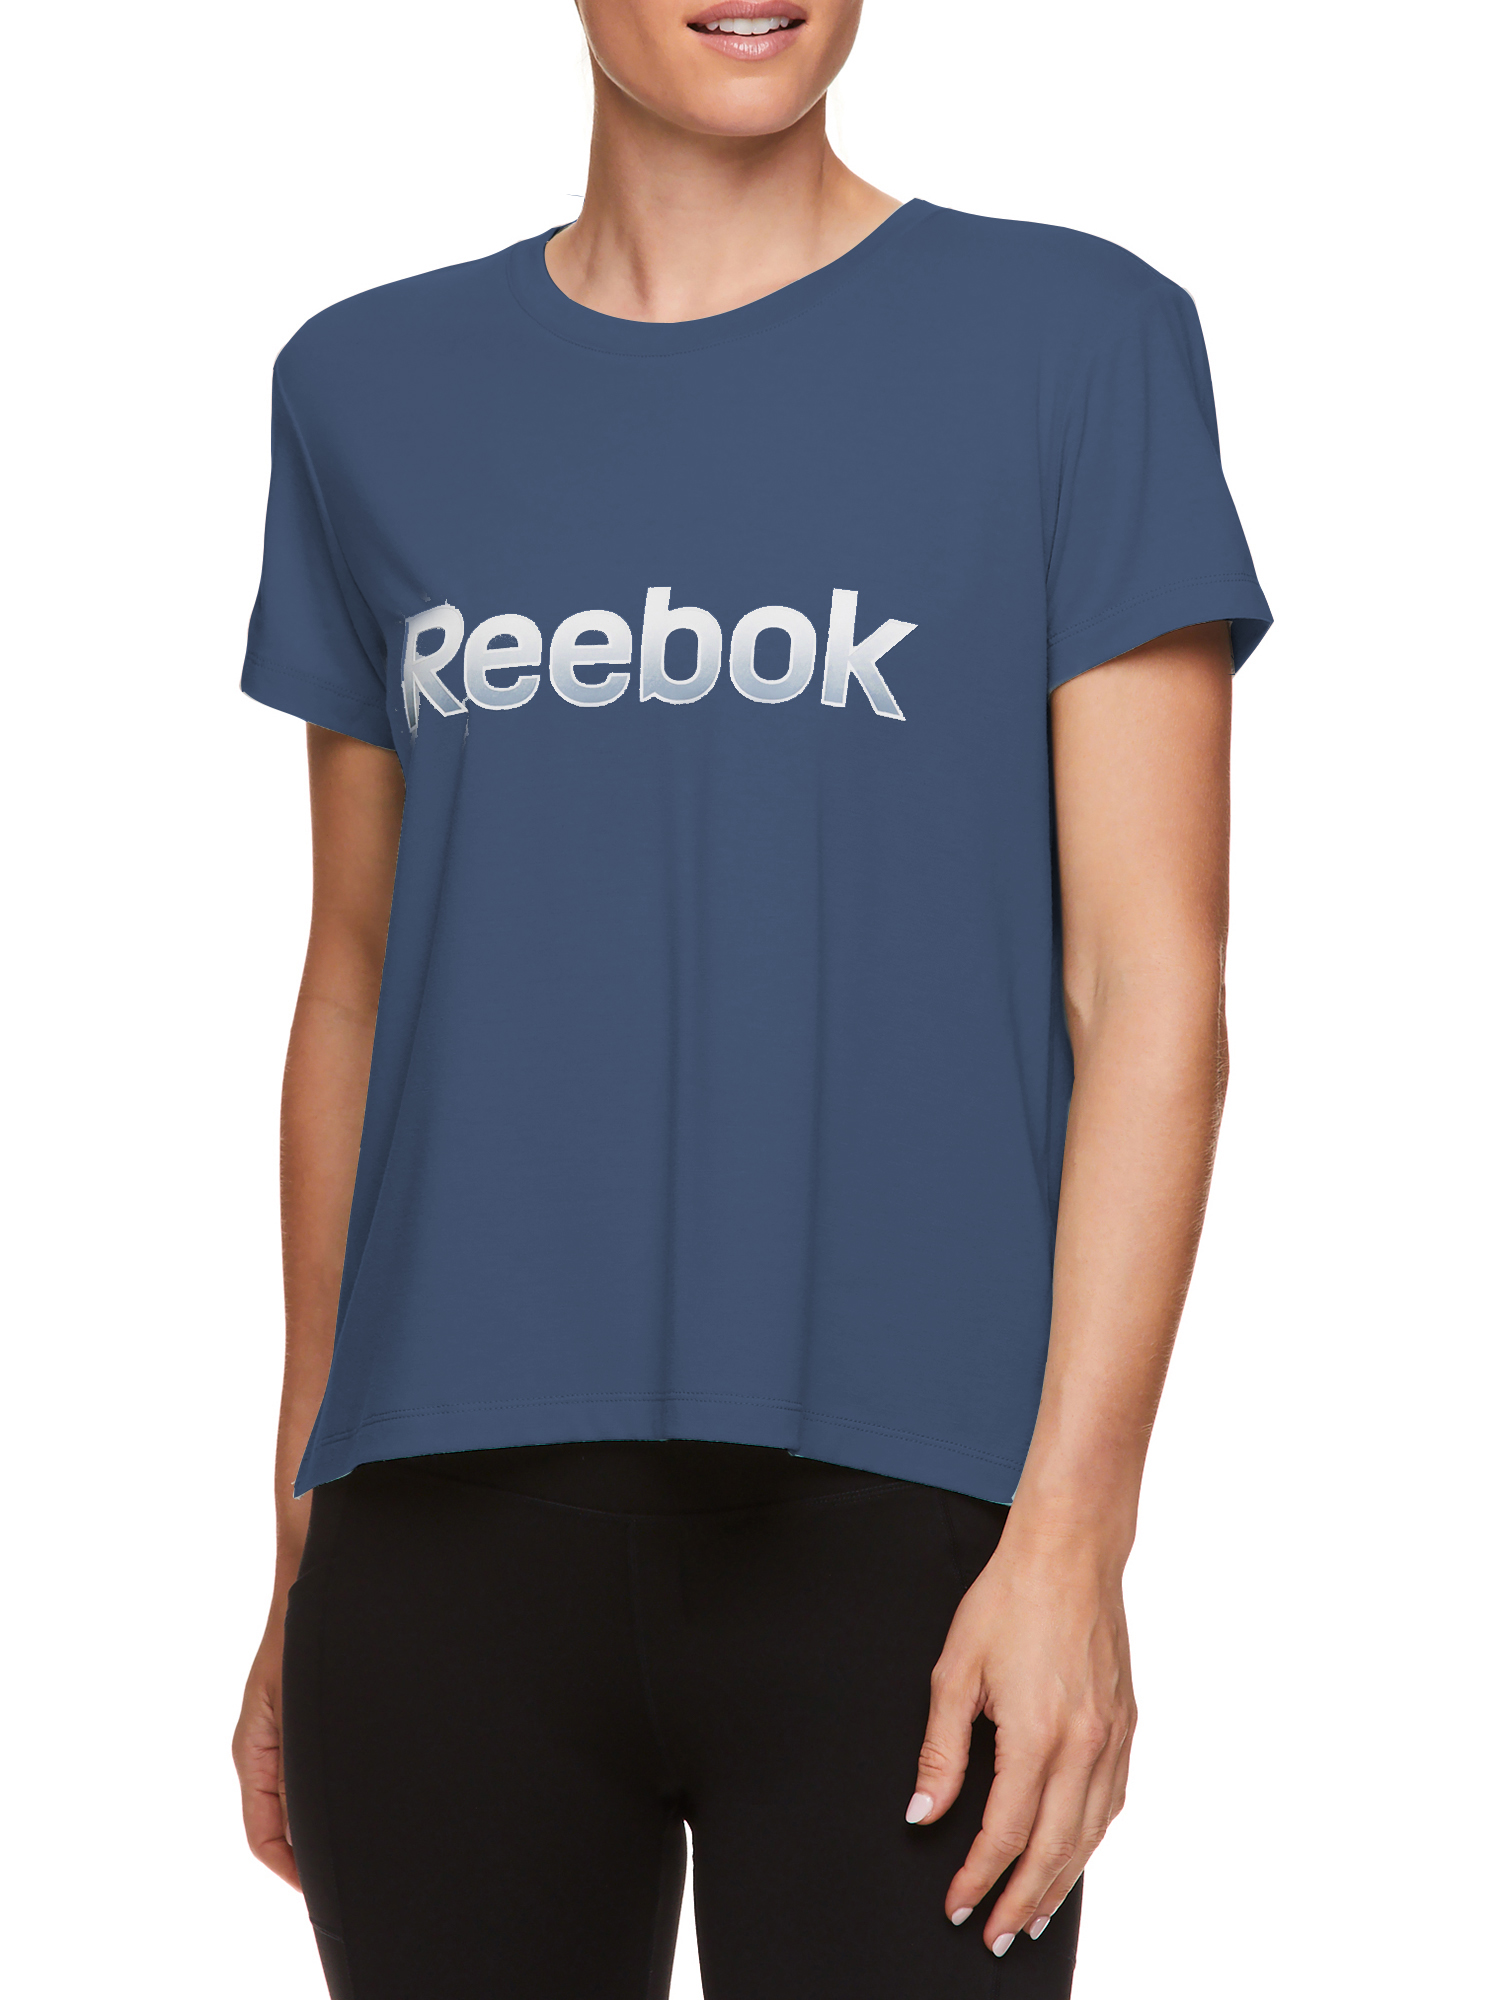 Reebok Women's Short Sleeve Jersey Graphic Tee - image 1 of 4